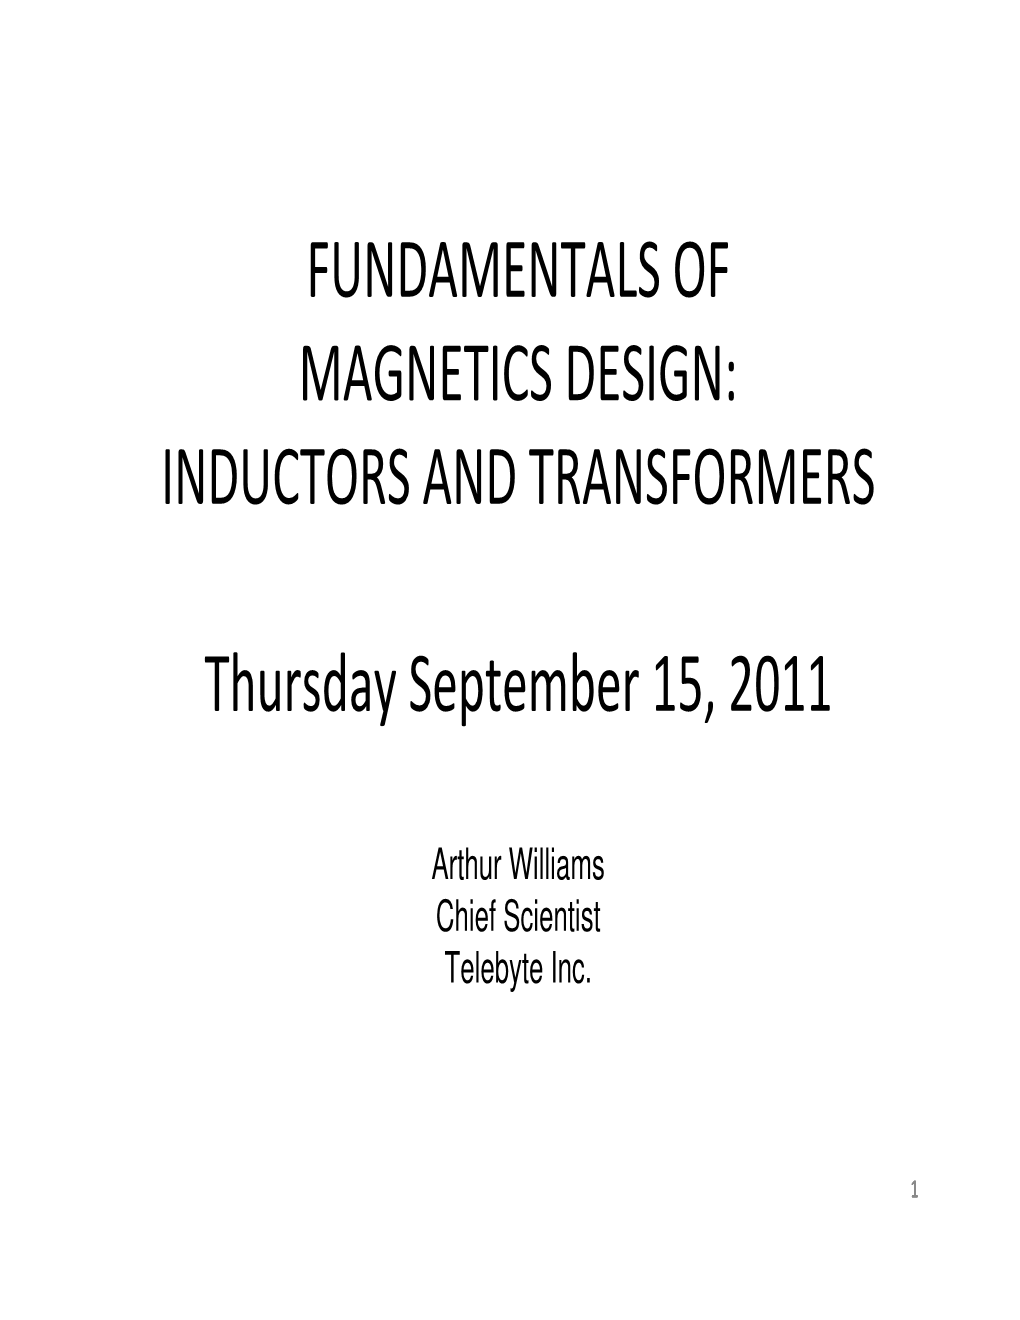 Fundamentals of Magnetics Design: Inductors and Transformers